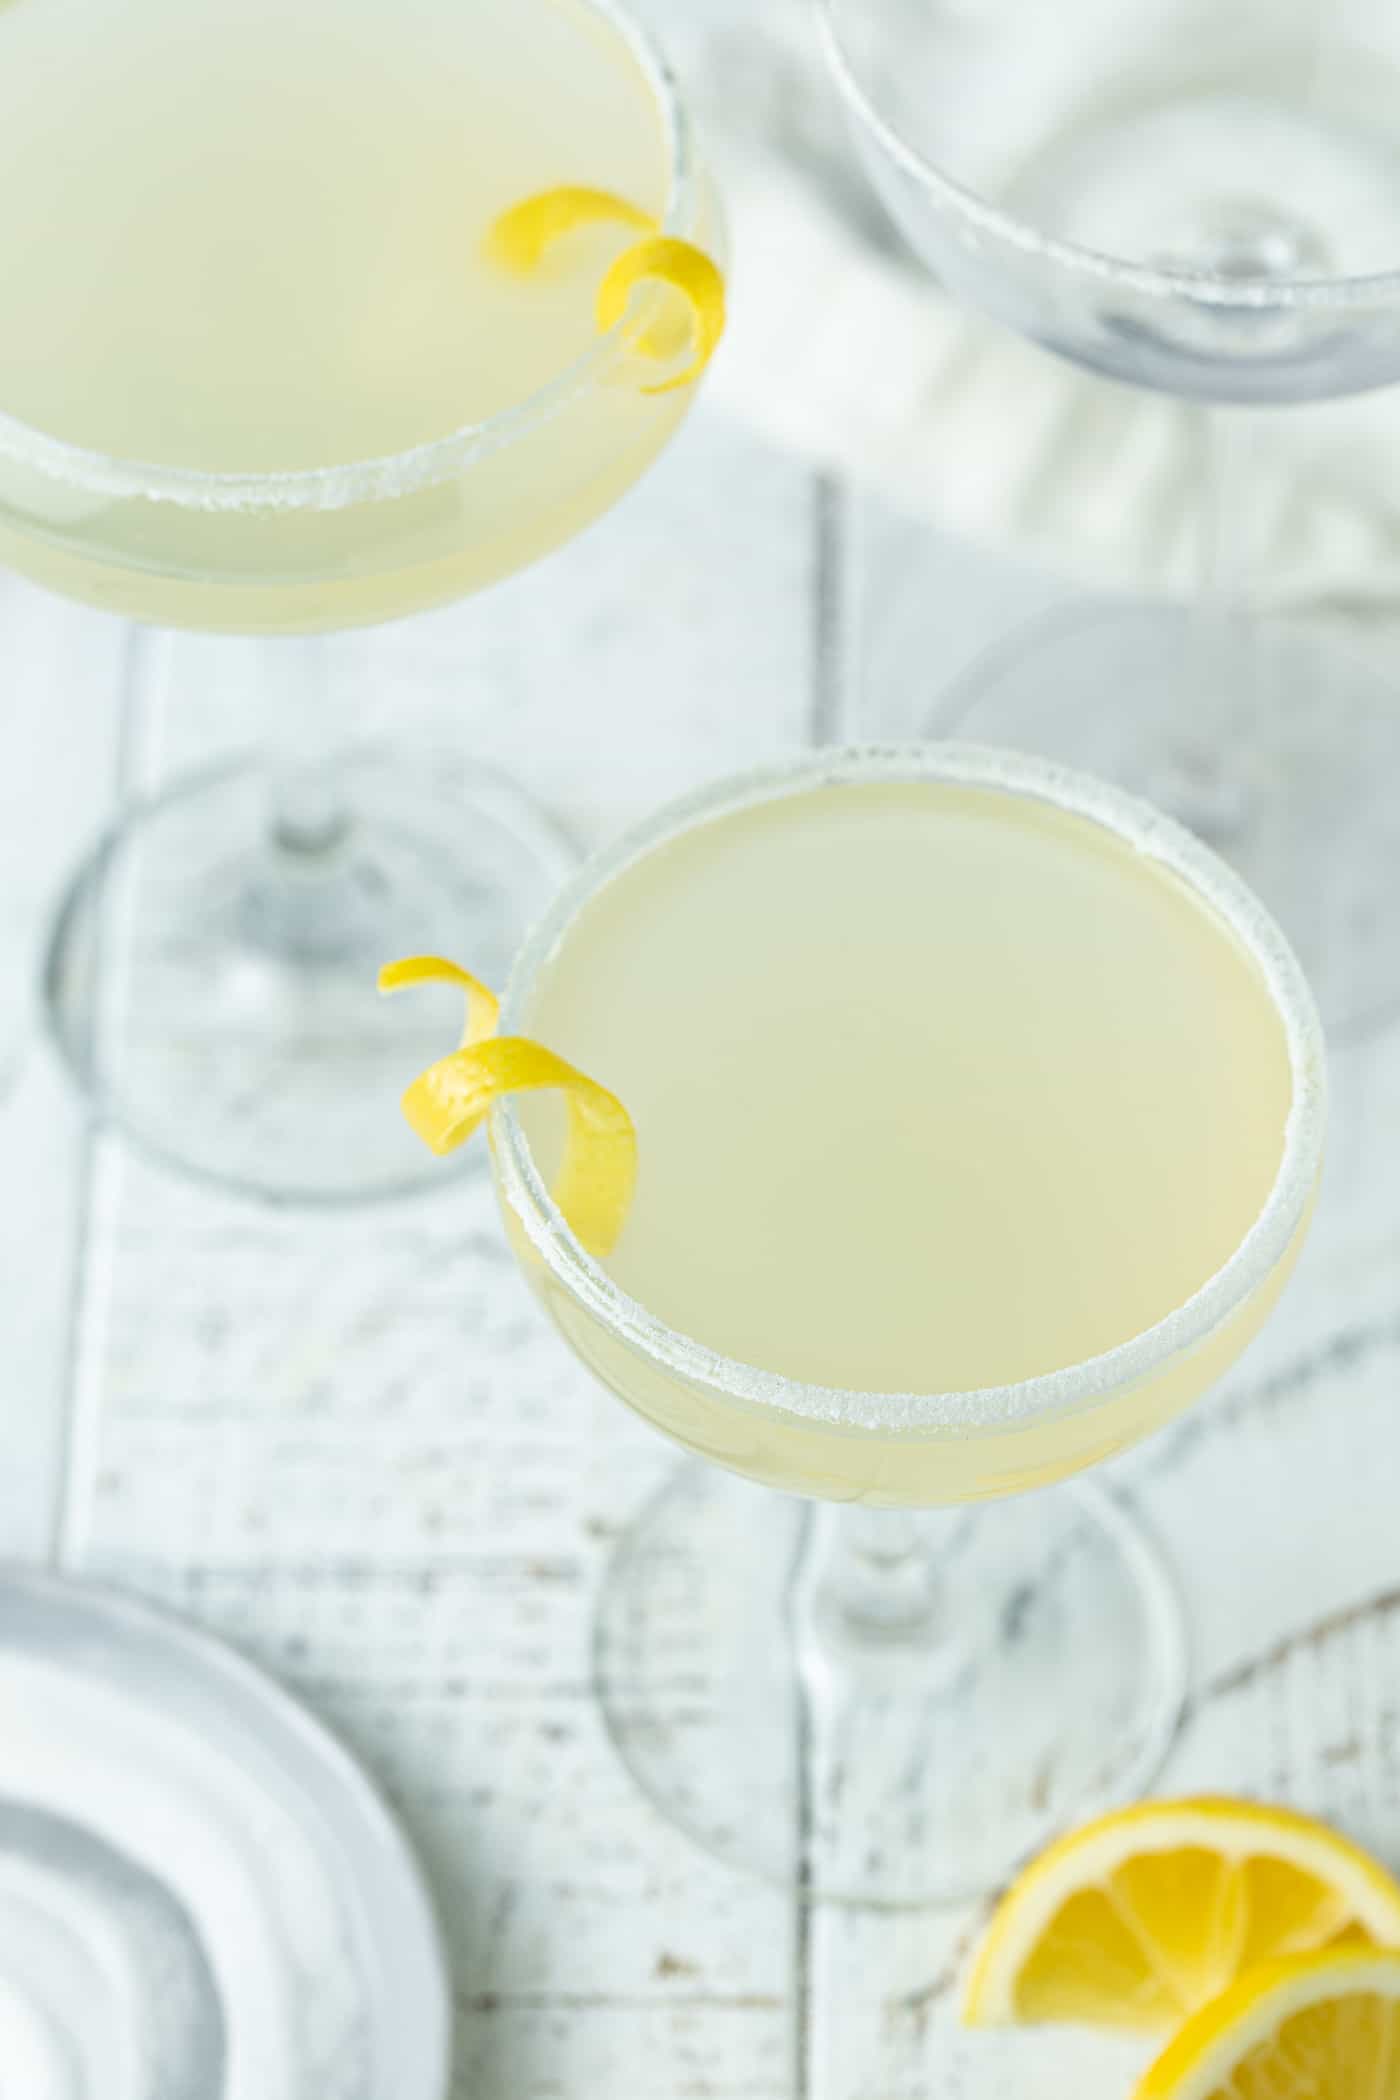 Lemon and Martini with lemon twist.